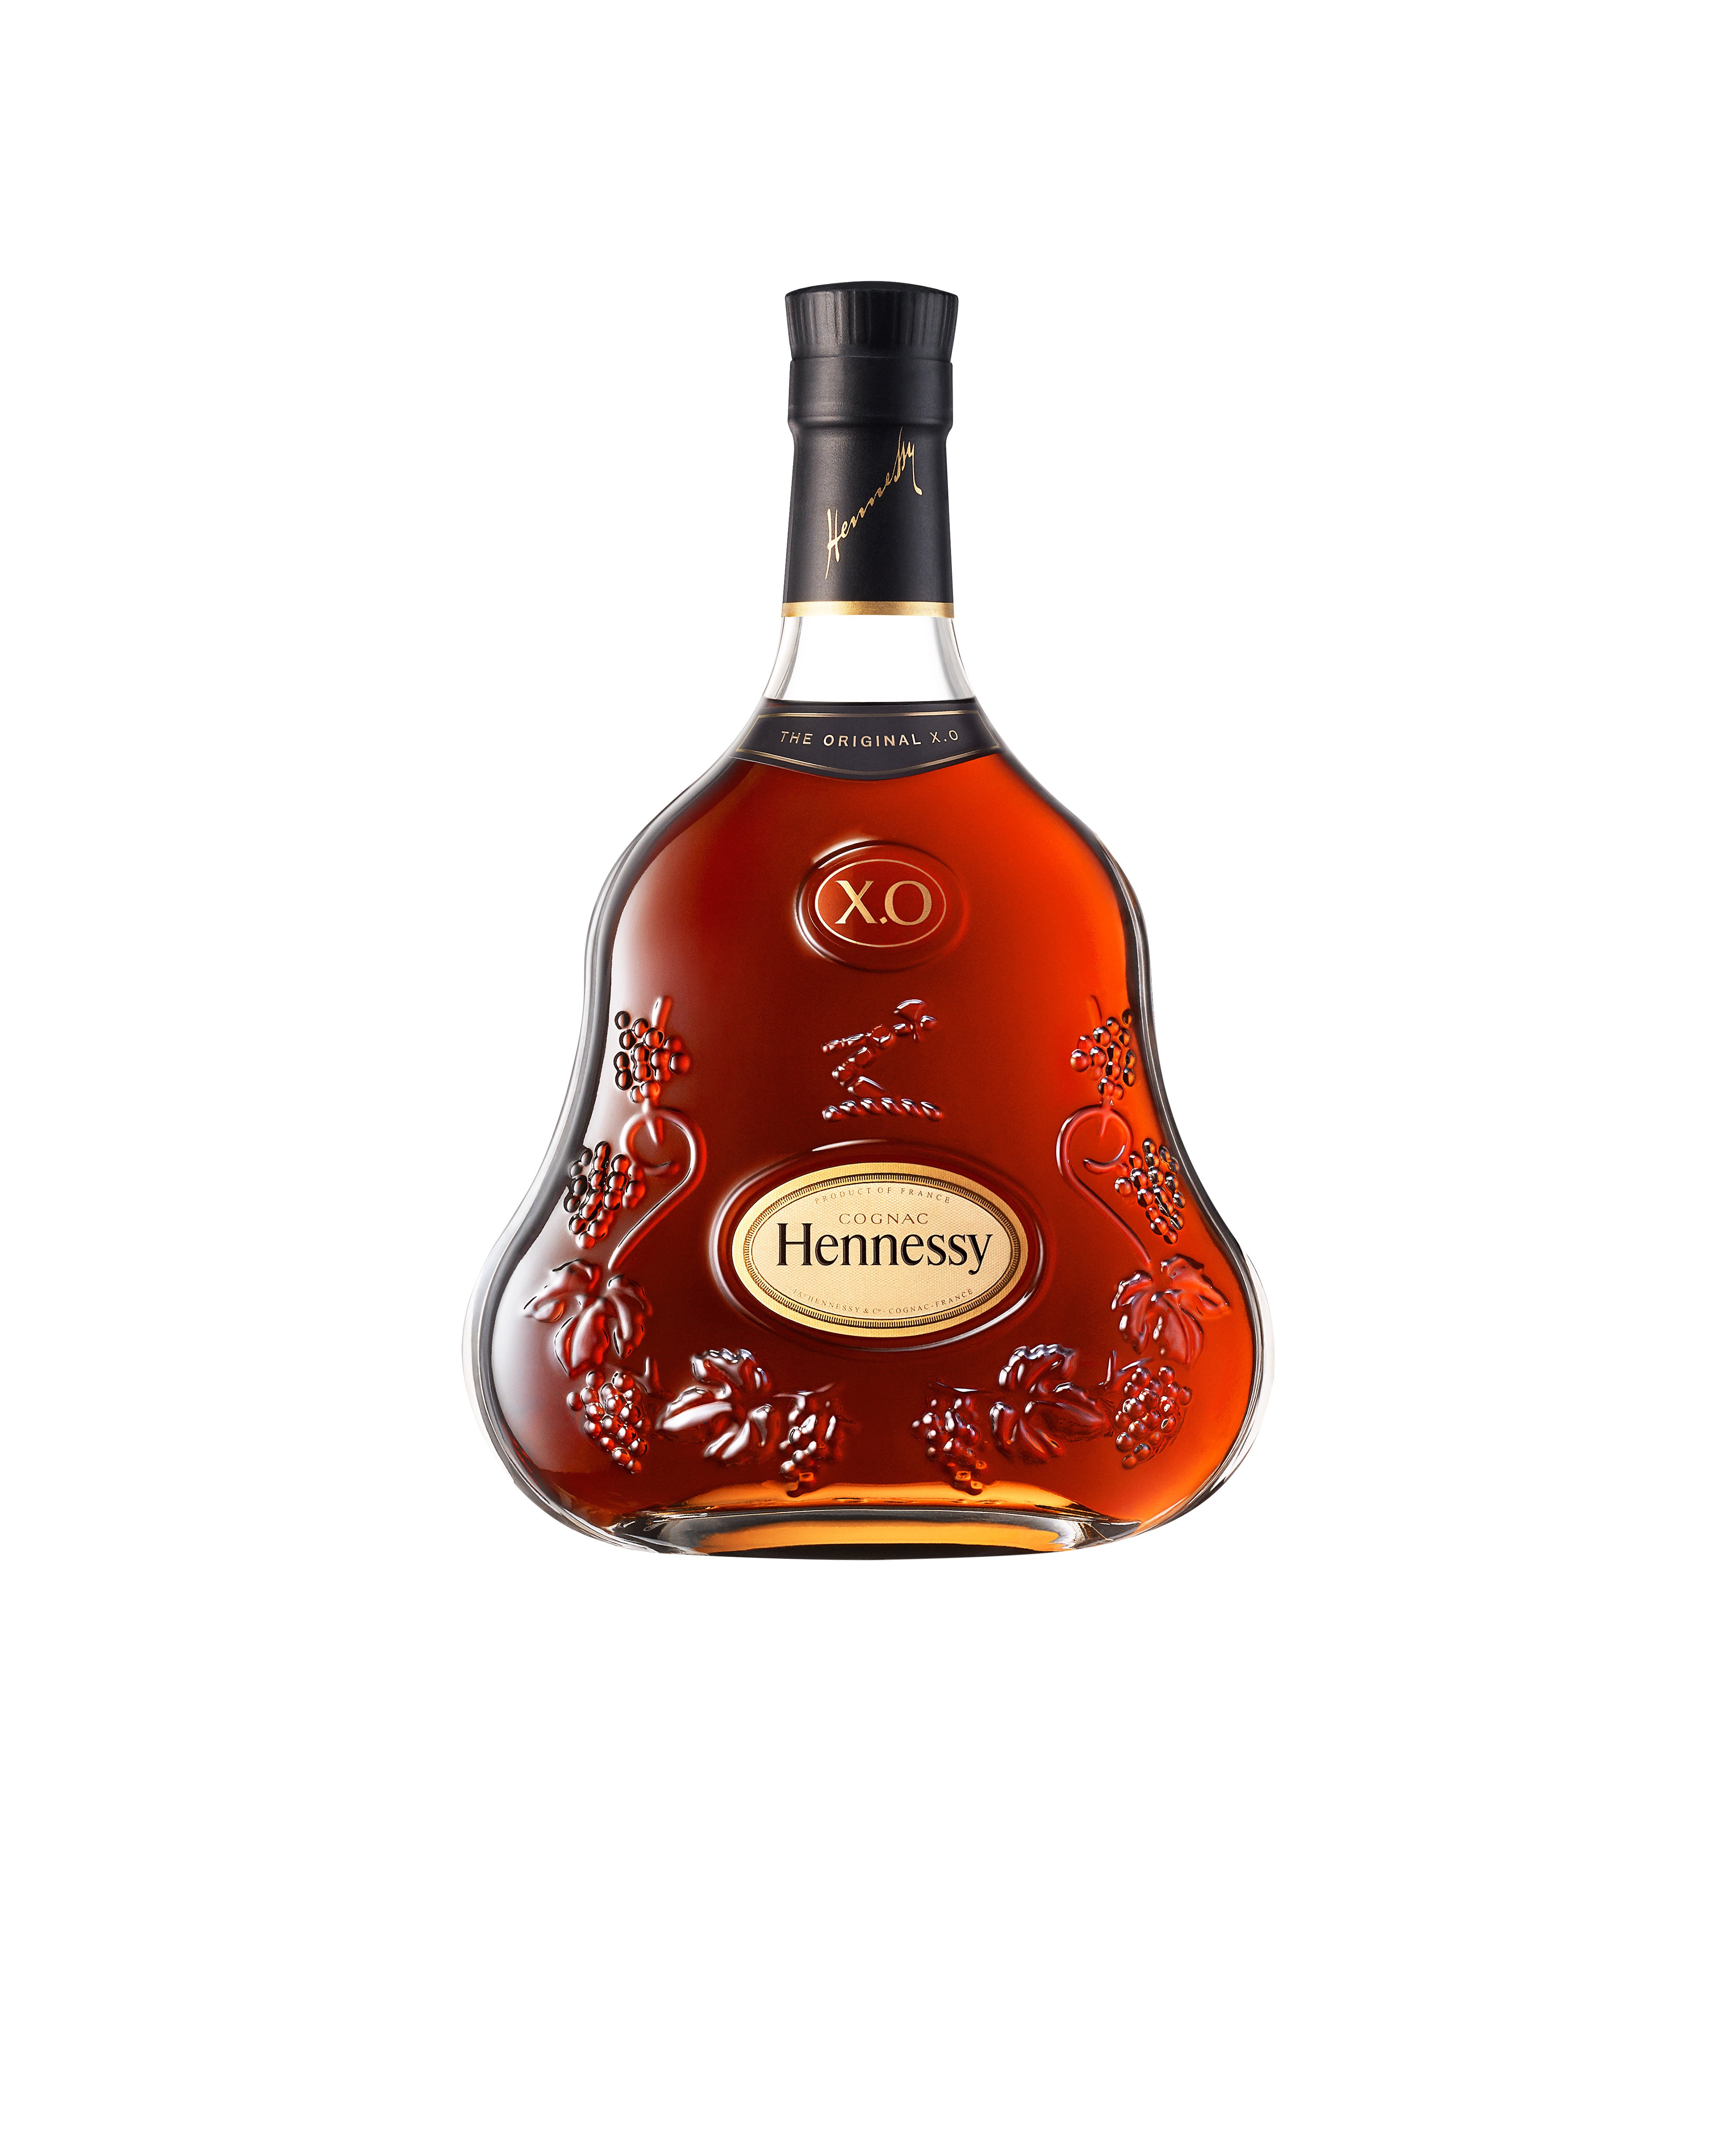 Hennessy x.o